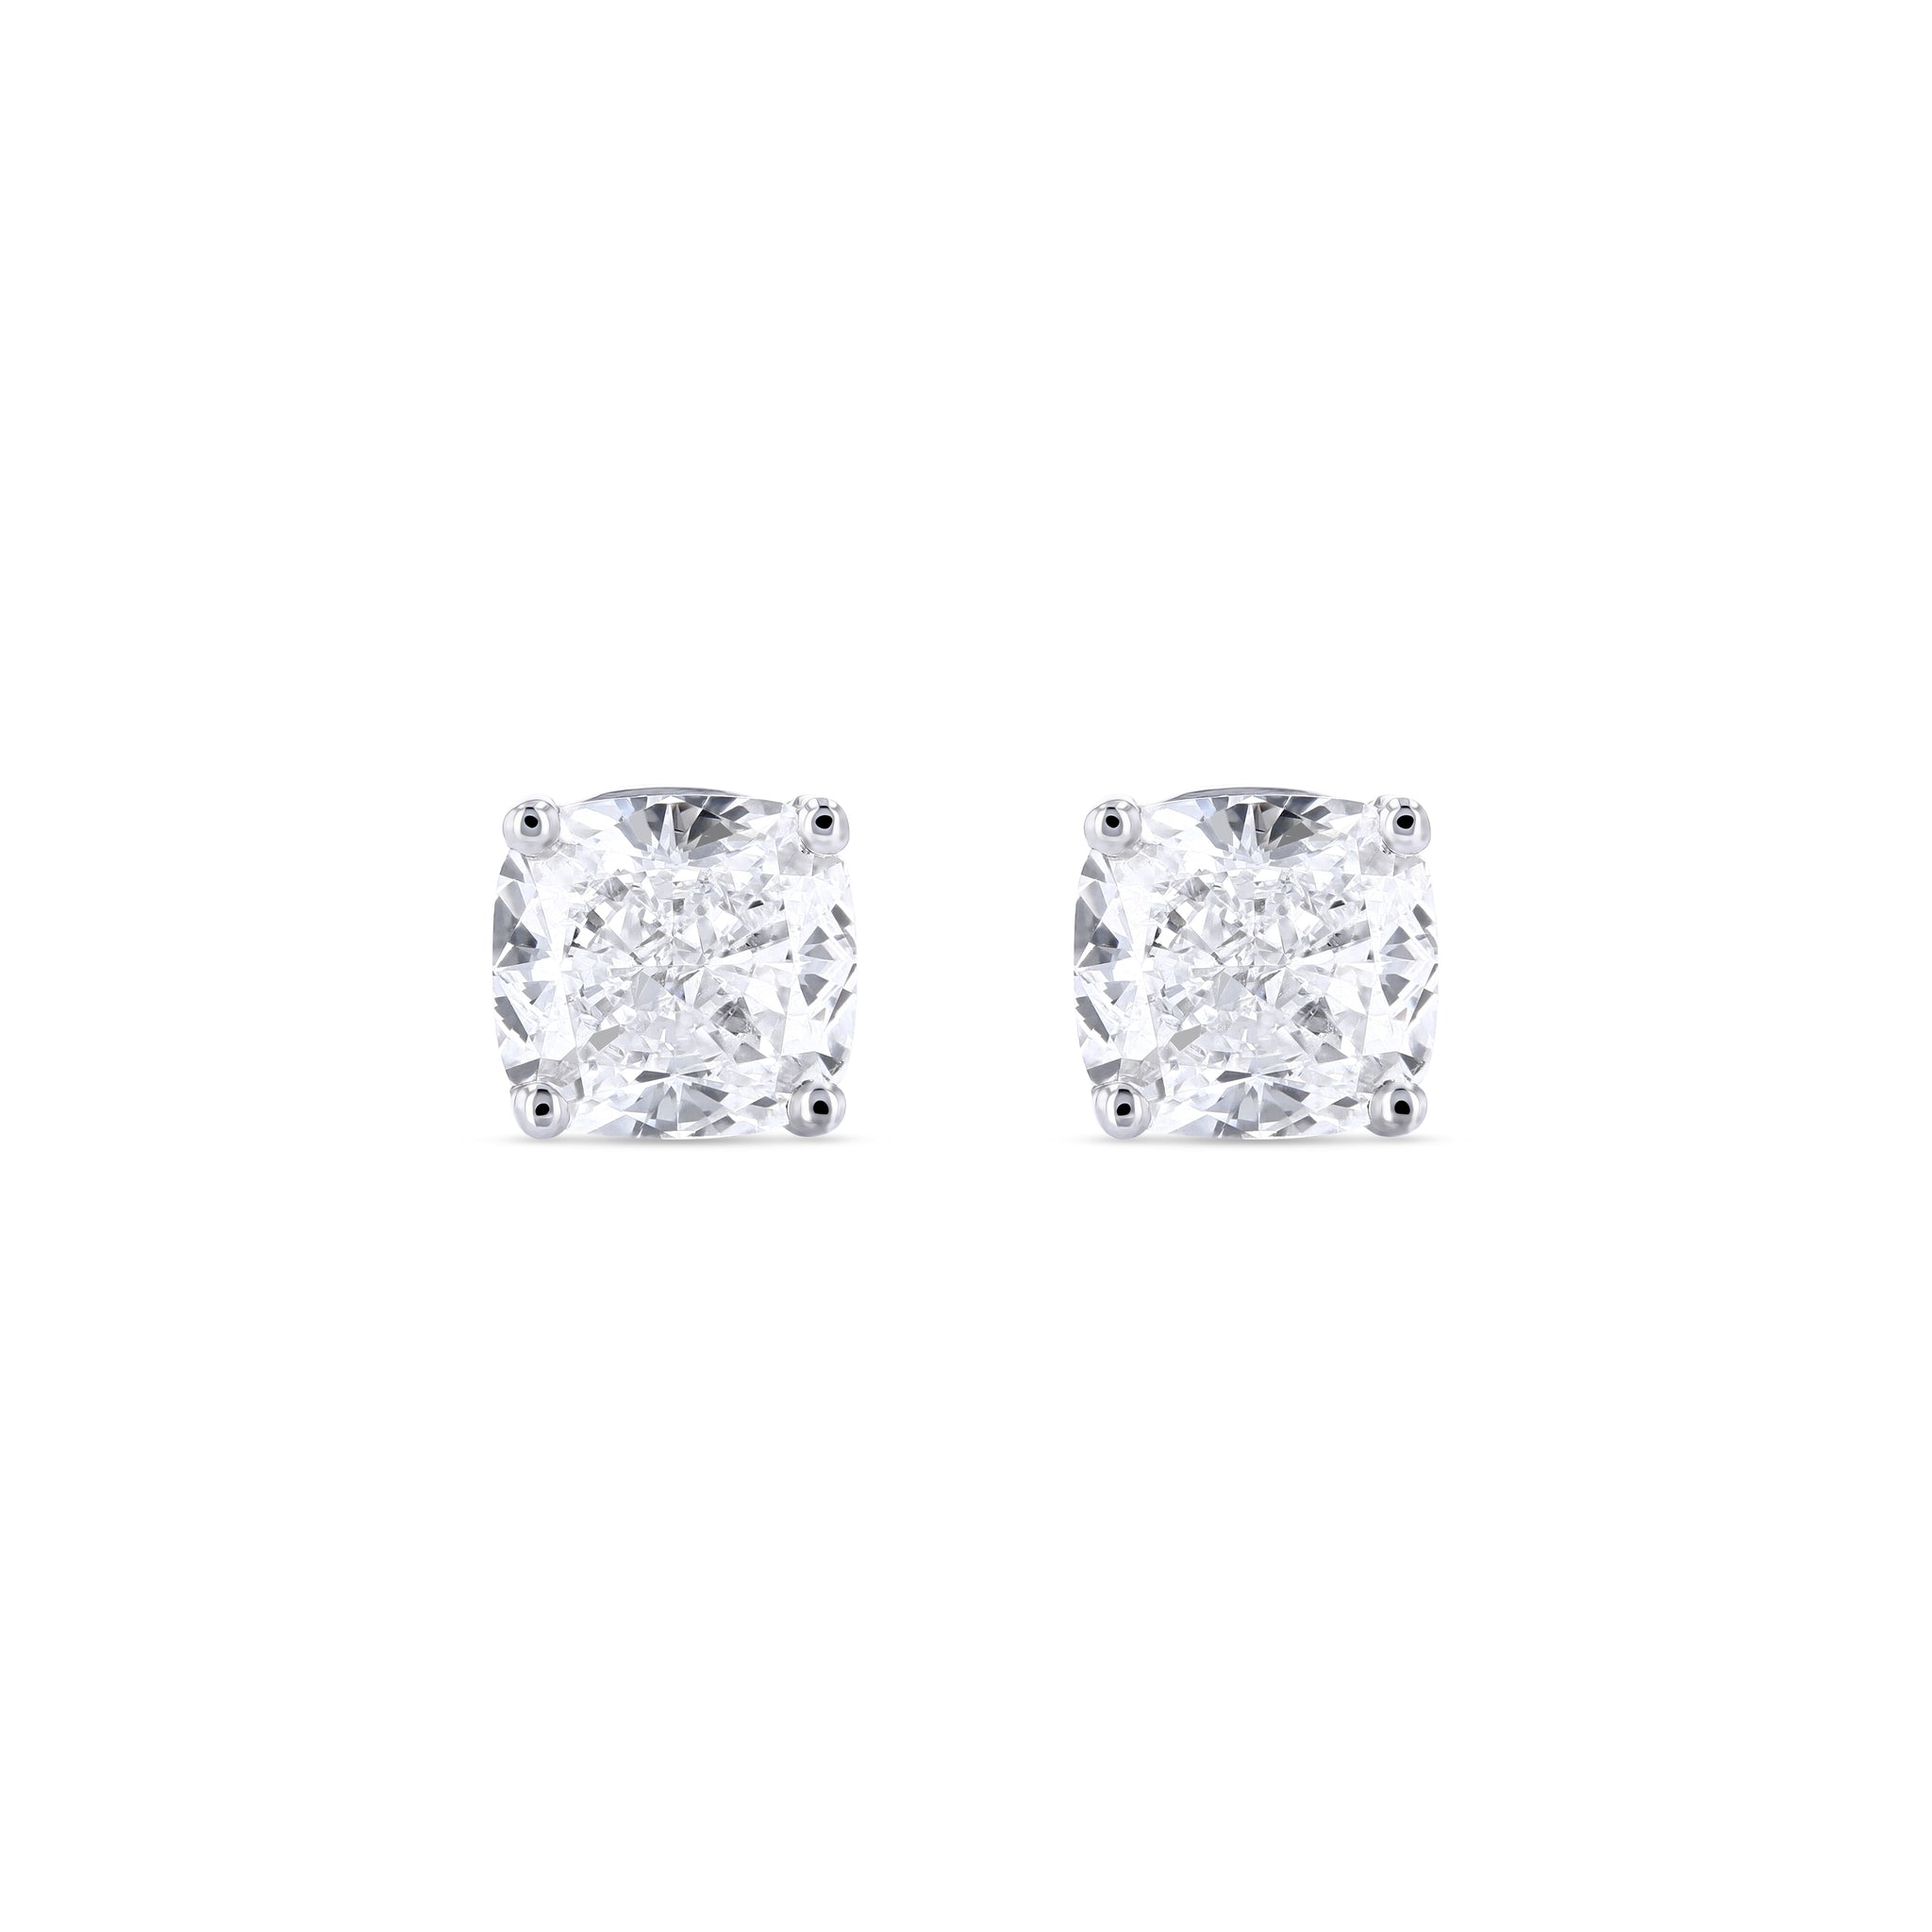 Cushion Cut Diamond Earrings - Lab Grown Diamonds - 18K Gold